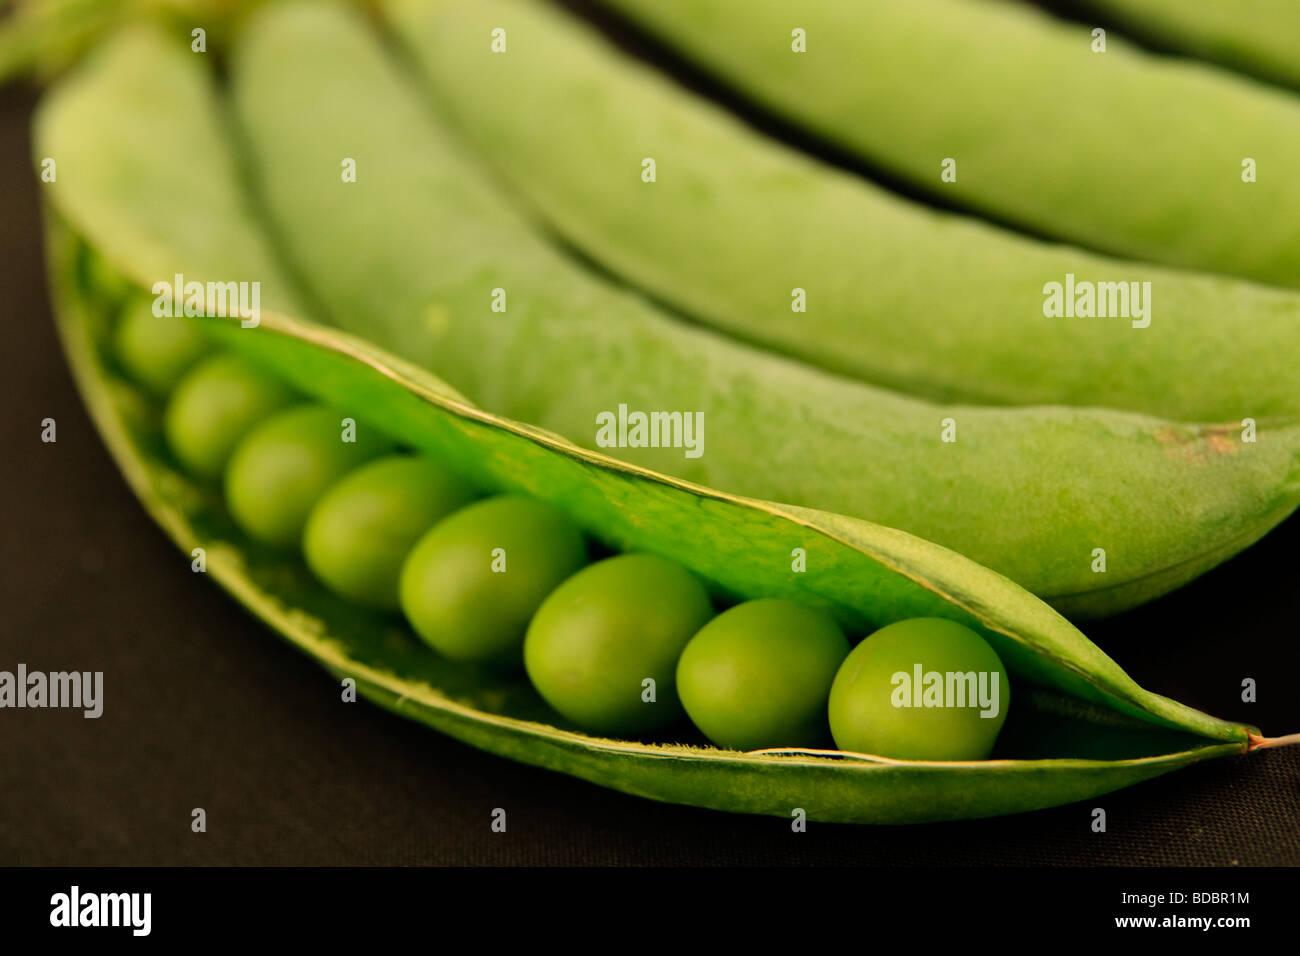 Macro image of green peas in pod Stock Photo